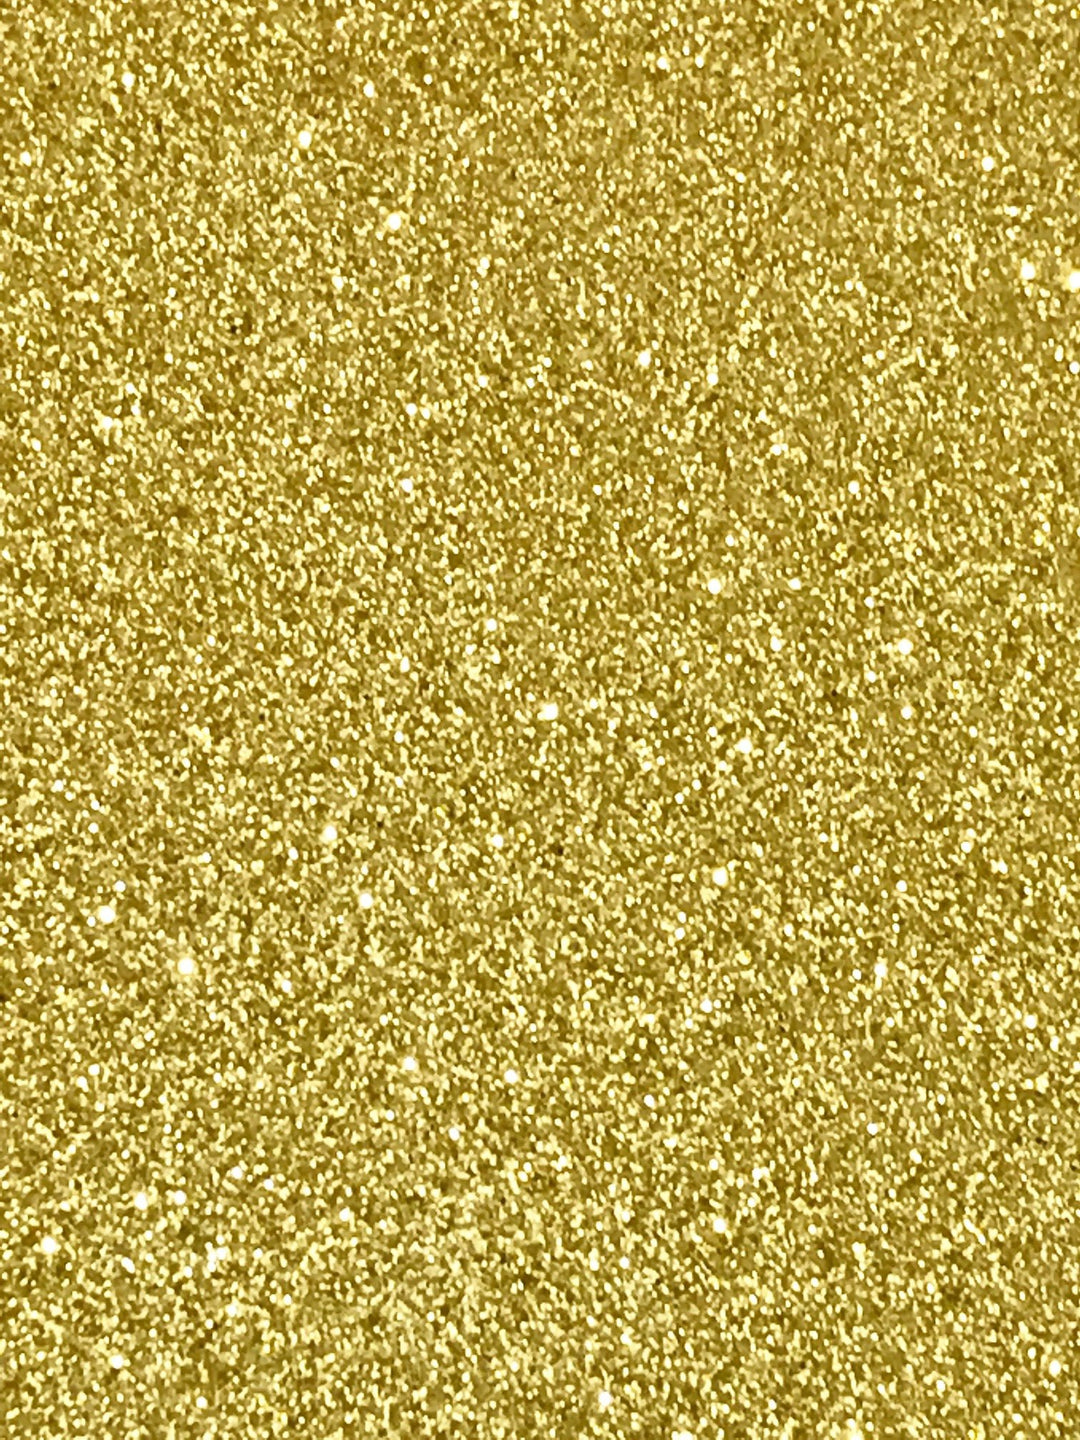 Fine Gold Glitter Leatherette Fabric Sheet Thin 0.6mm